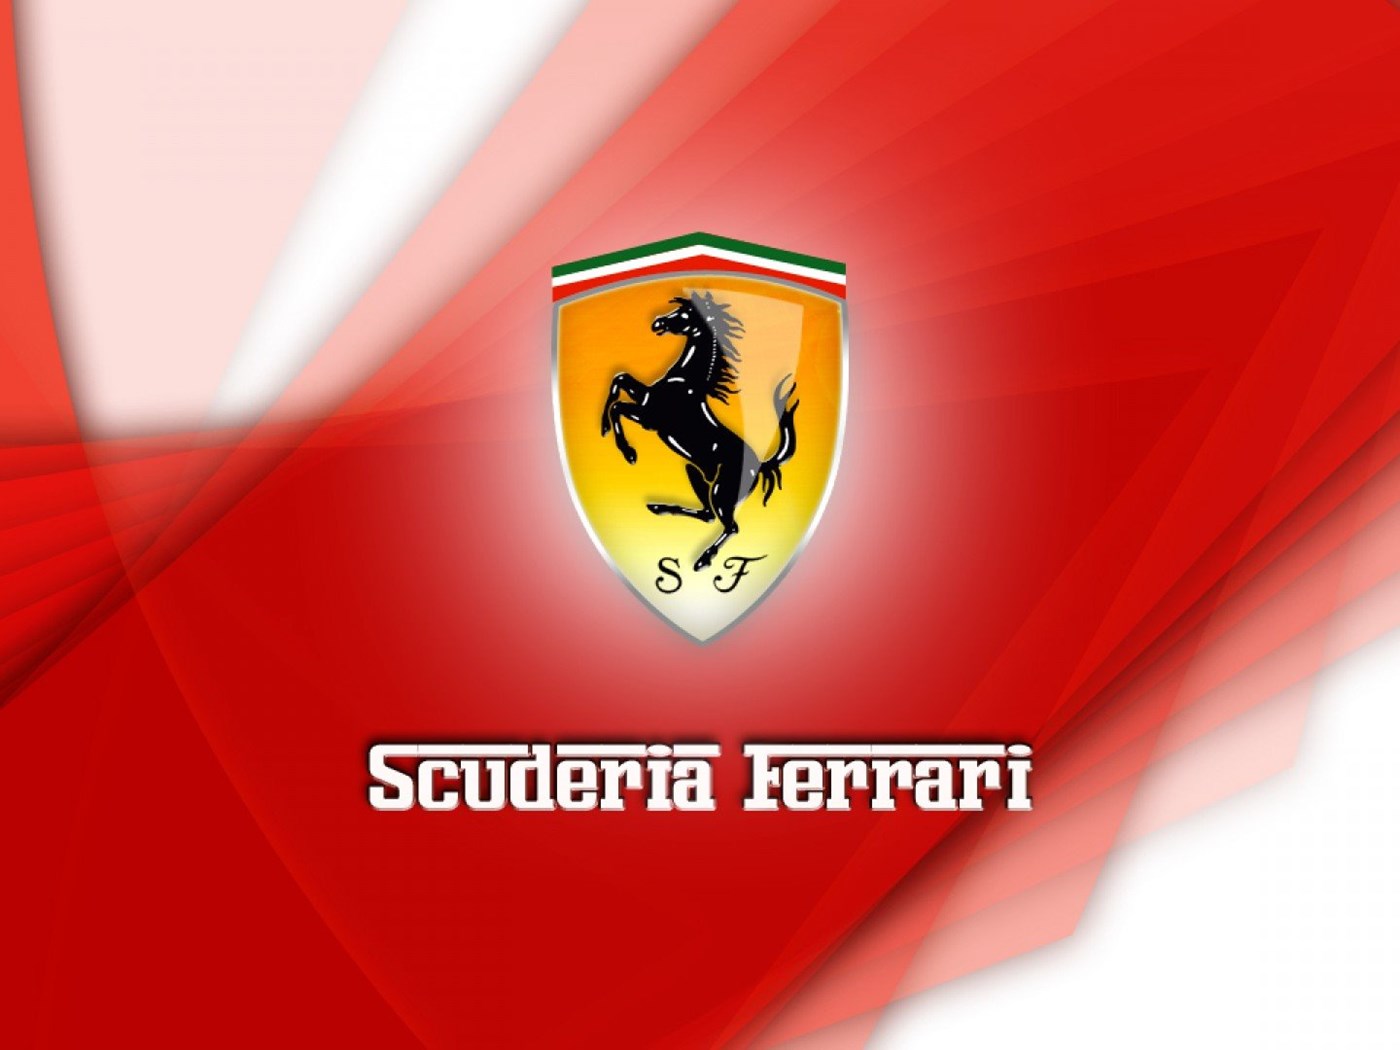 Ferrari group